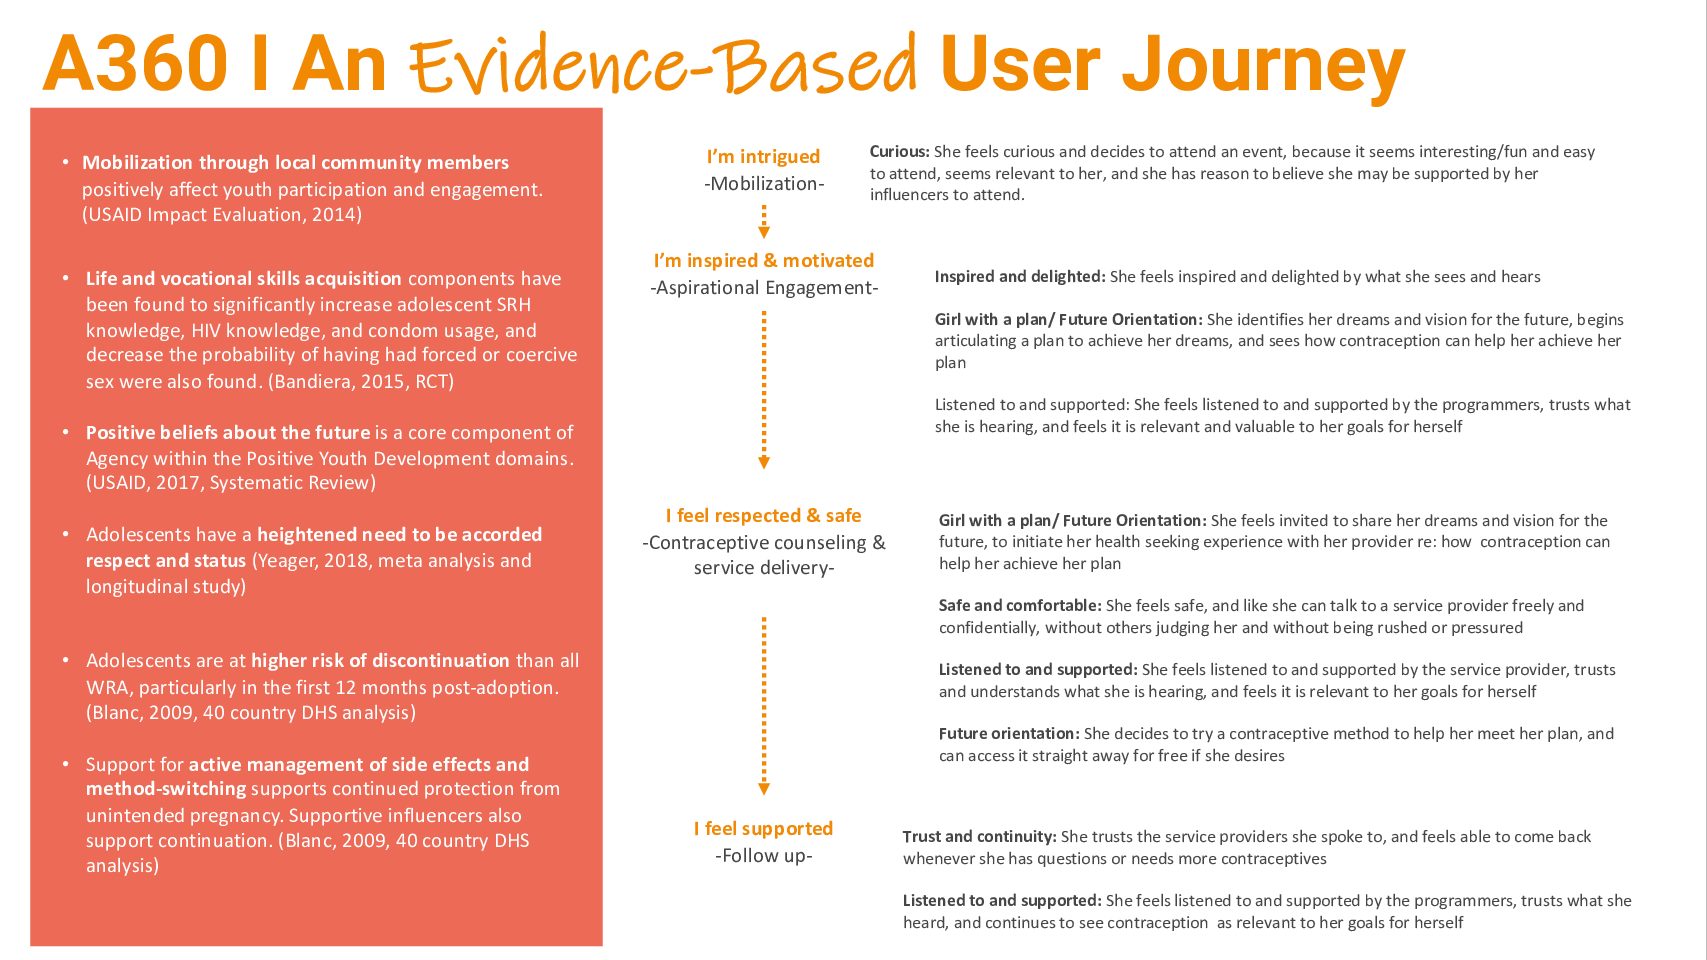 A360’s Evidence-Based User Journey